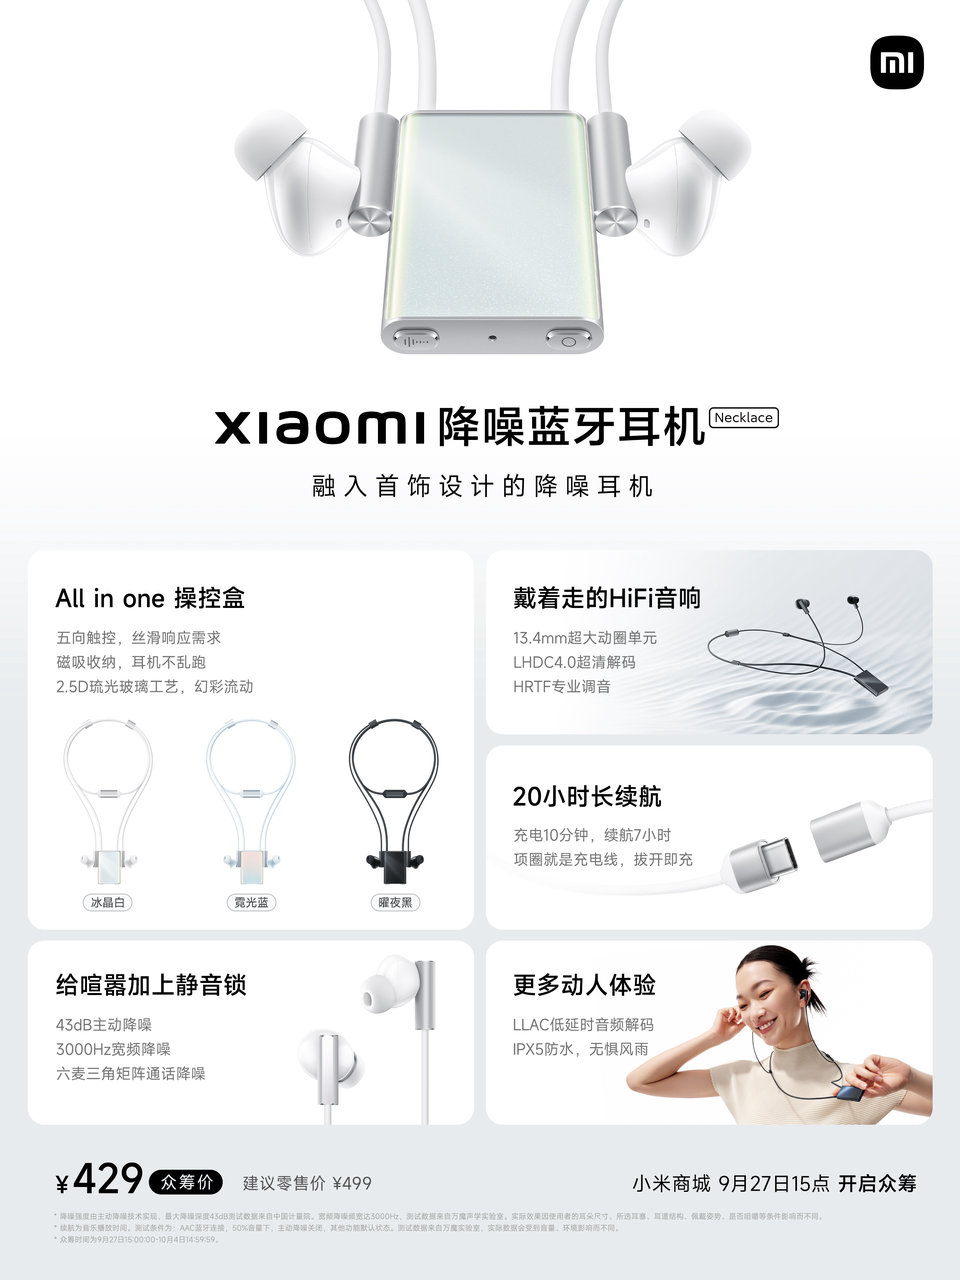 Xiaomi Bluetooth headset (Necklace)